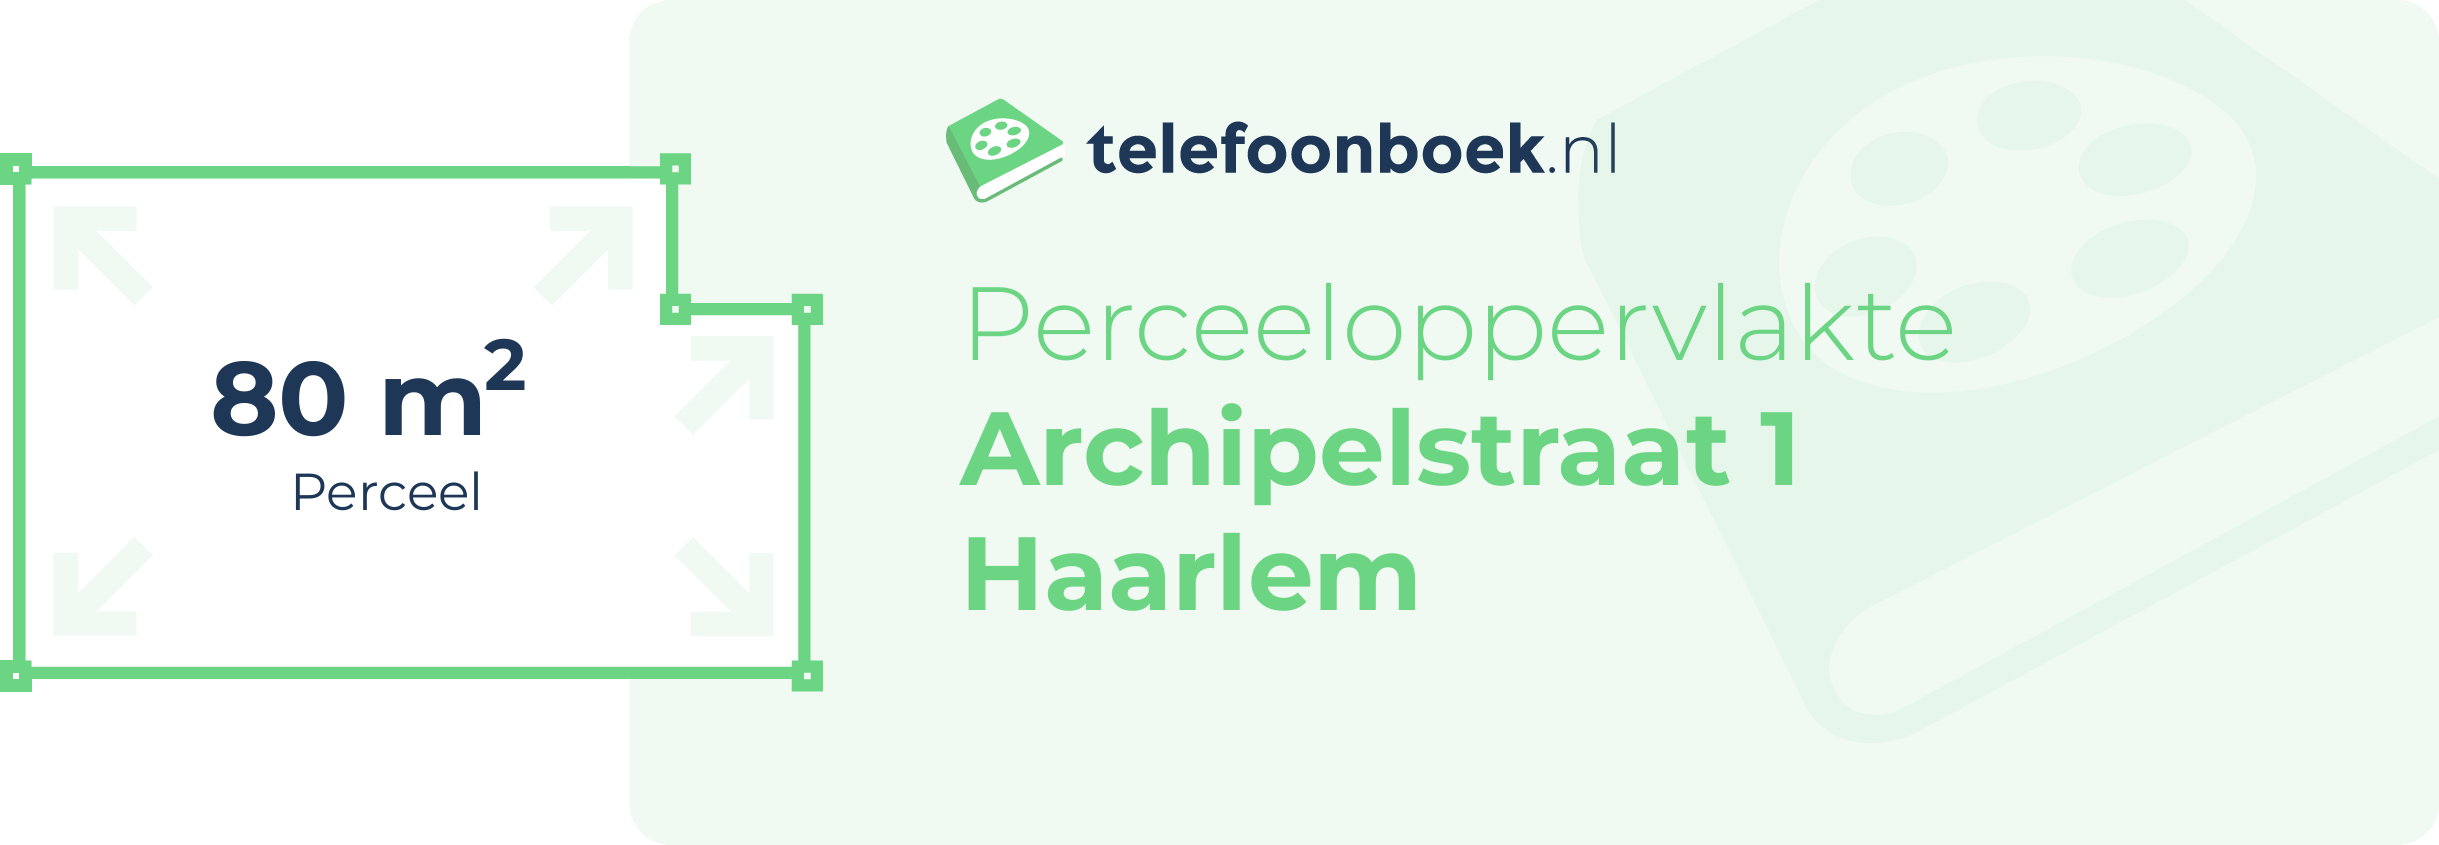 Perceeloppervlakte Archipelstraat 1 Haarlem